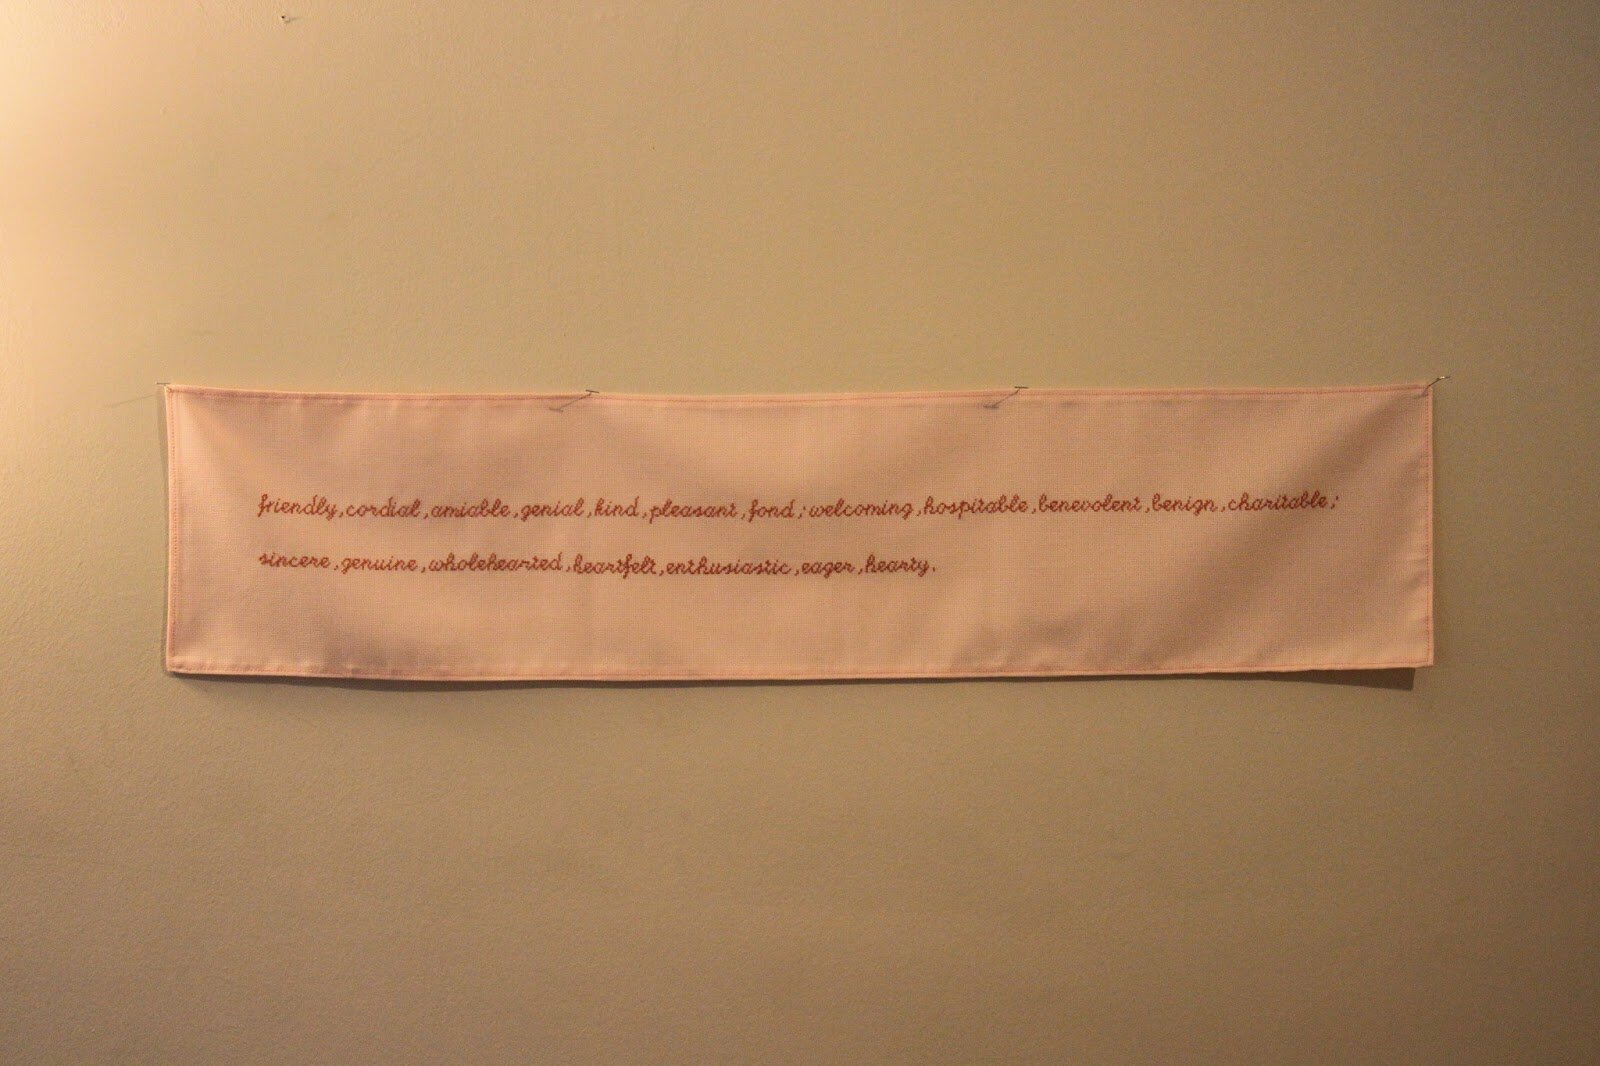  Irene Pérez -&nbsp; nineteen (warm) adjectives for you &nbsp;(embroidery floss on cotton) 2012 